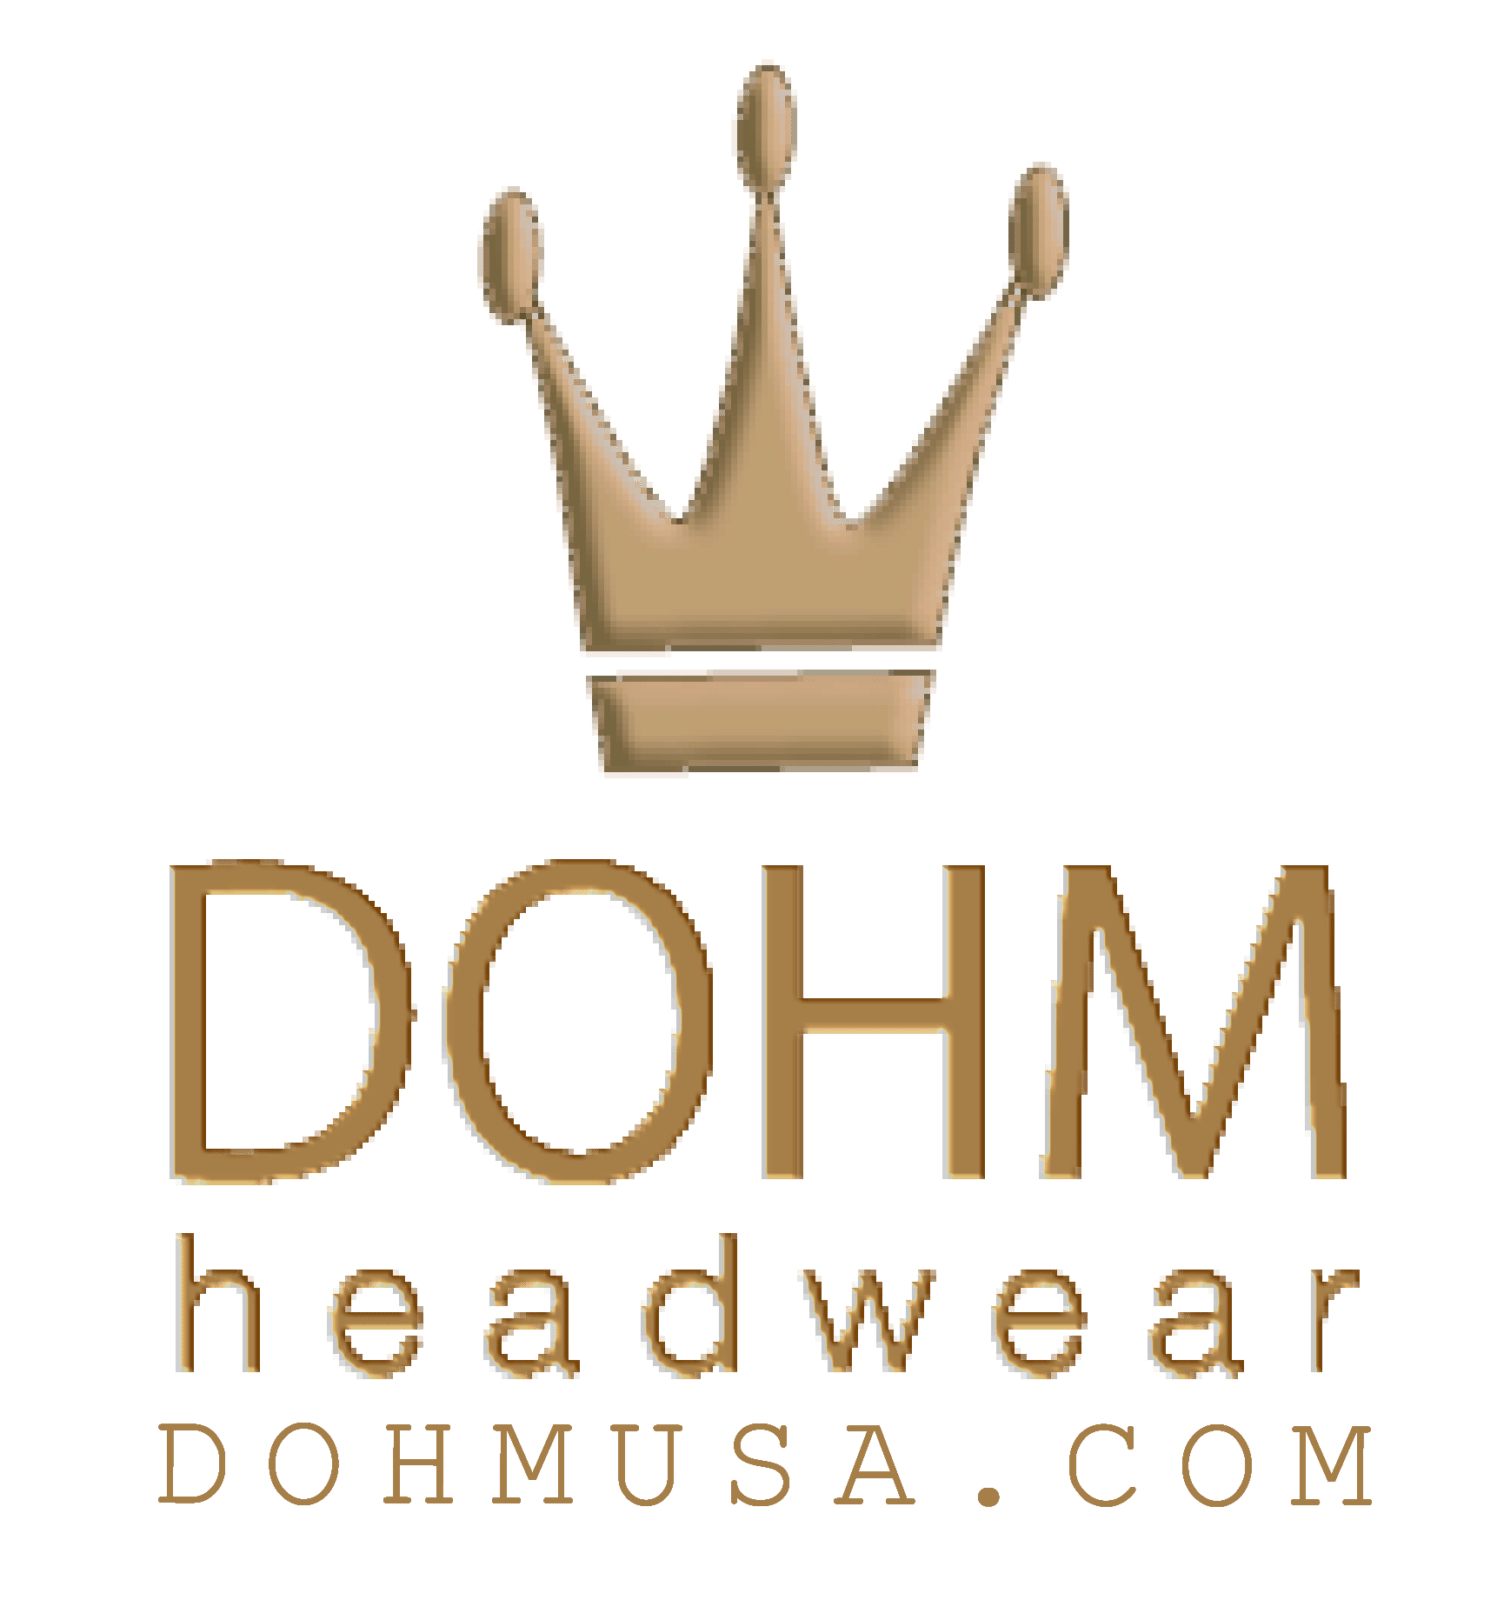 Dohm Usa, Hats made in USA